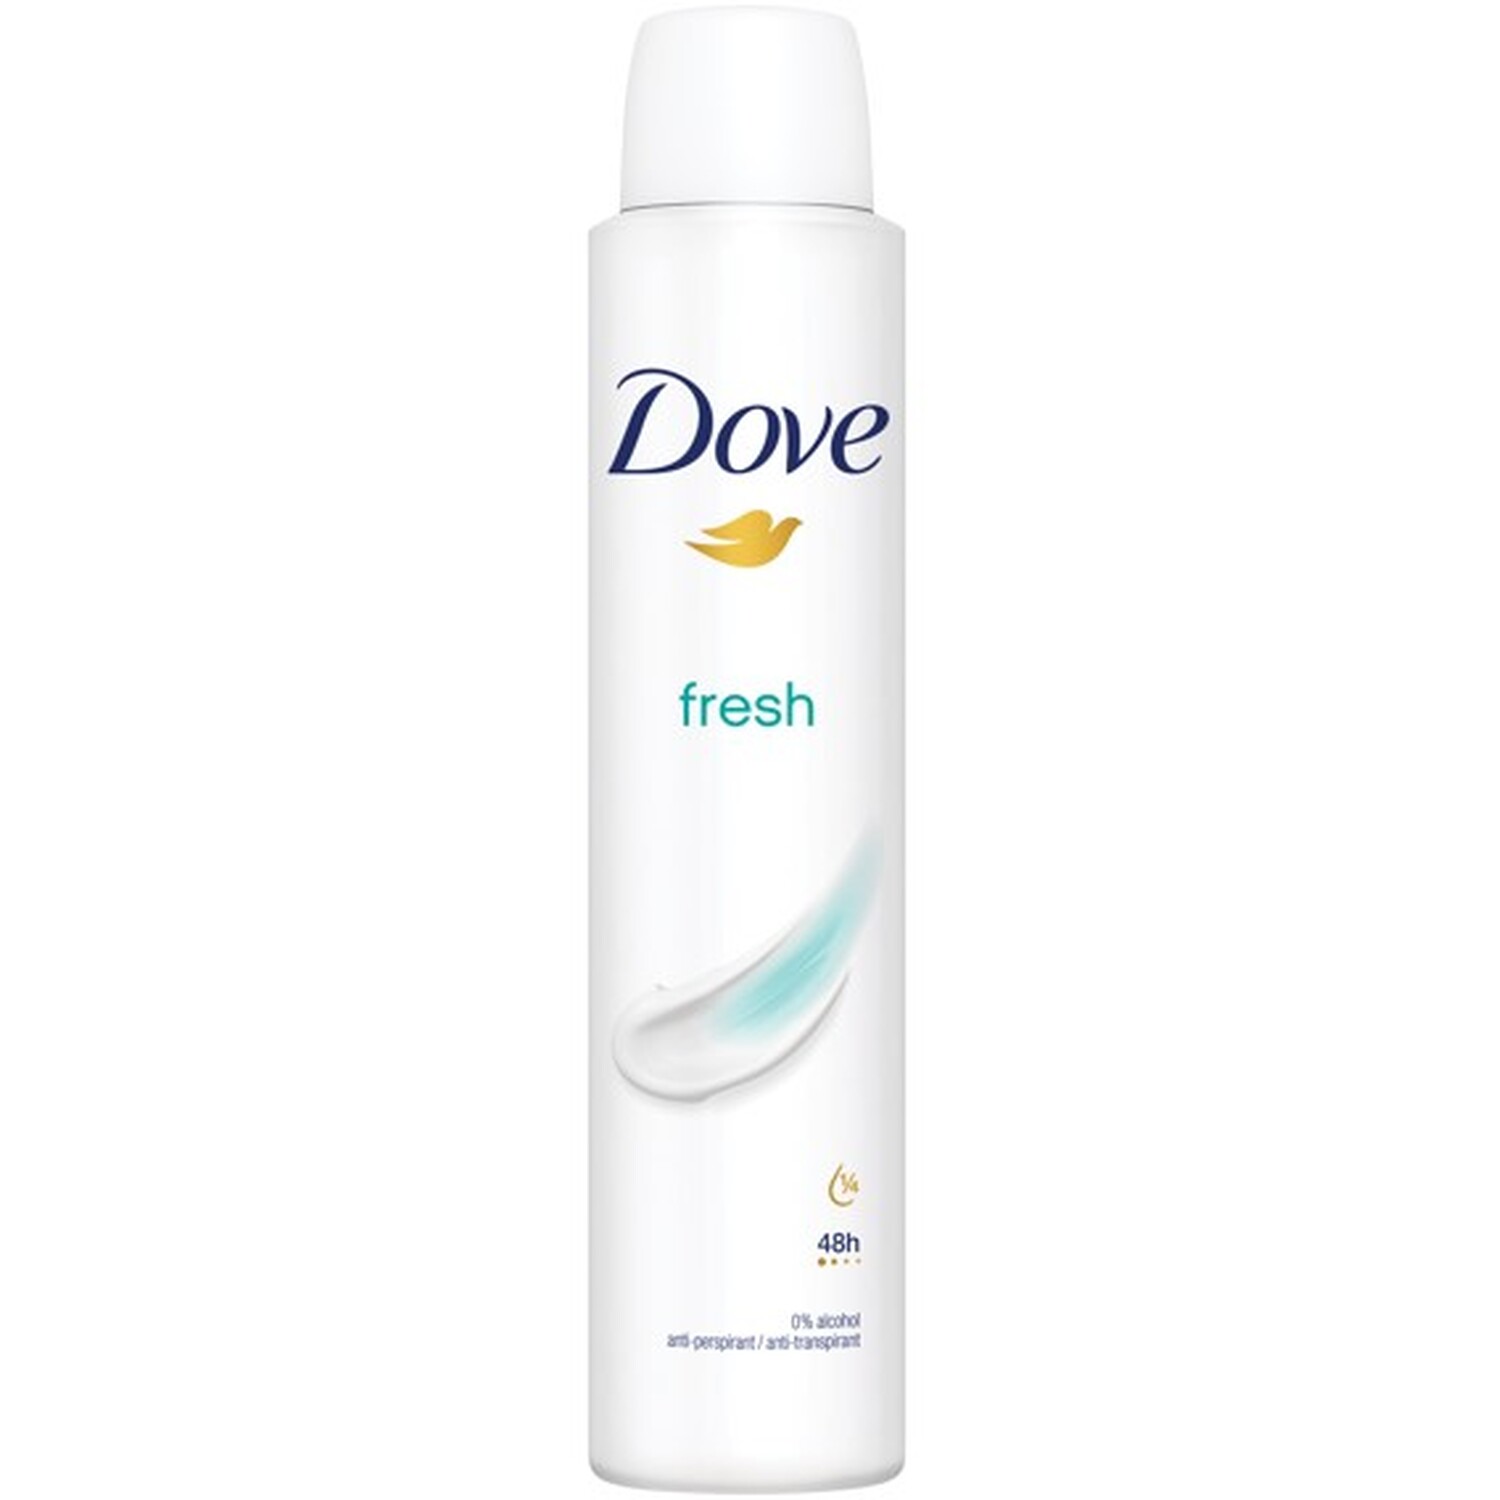 Dove Fresh Anti-Perspirant 200ml - White Image